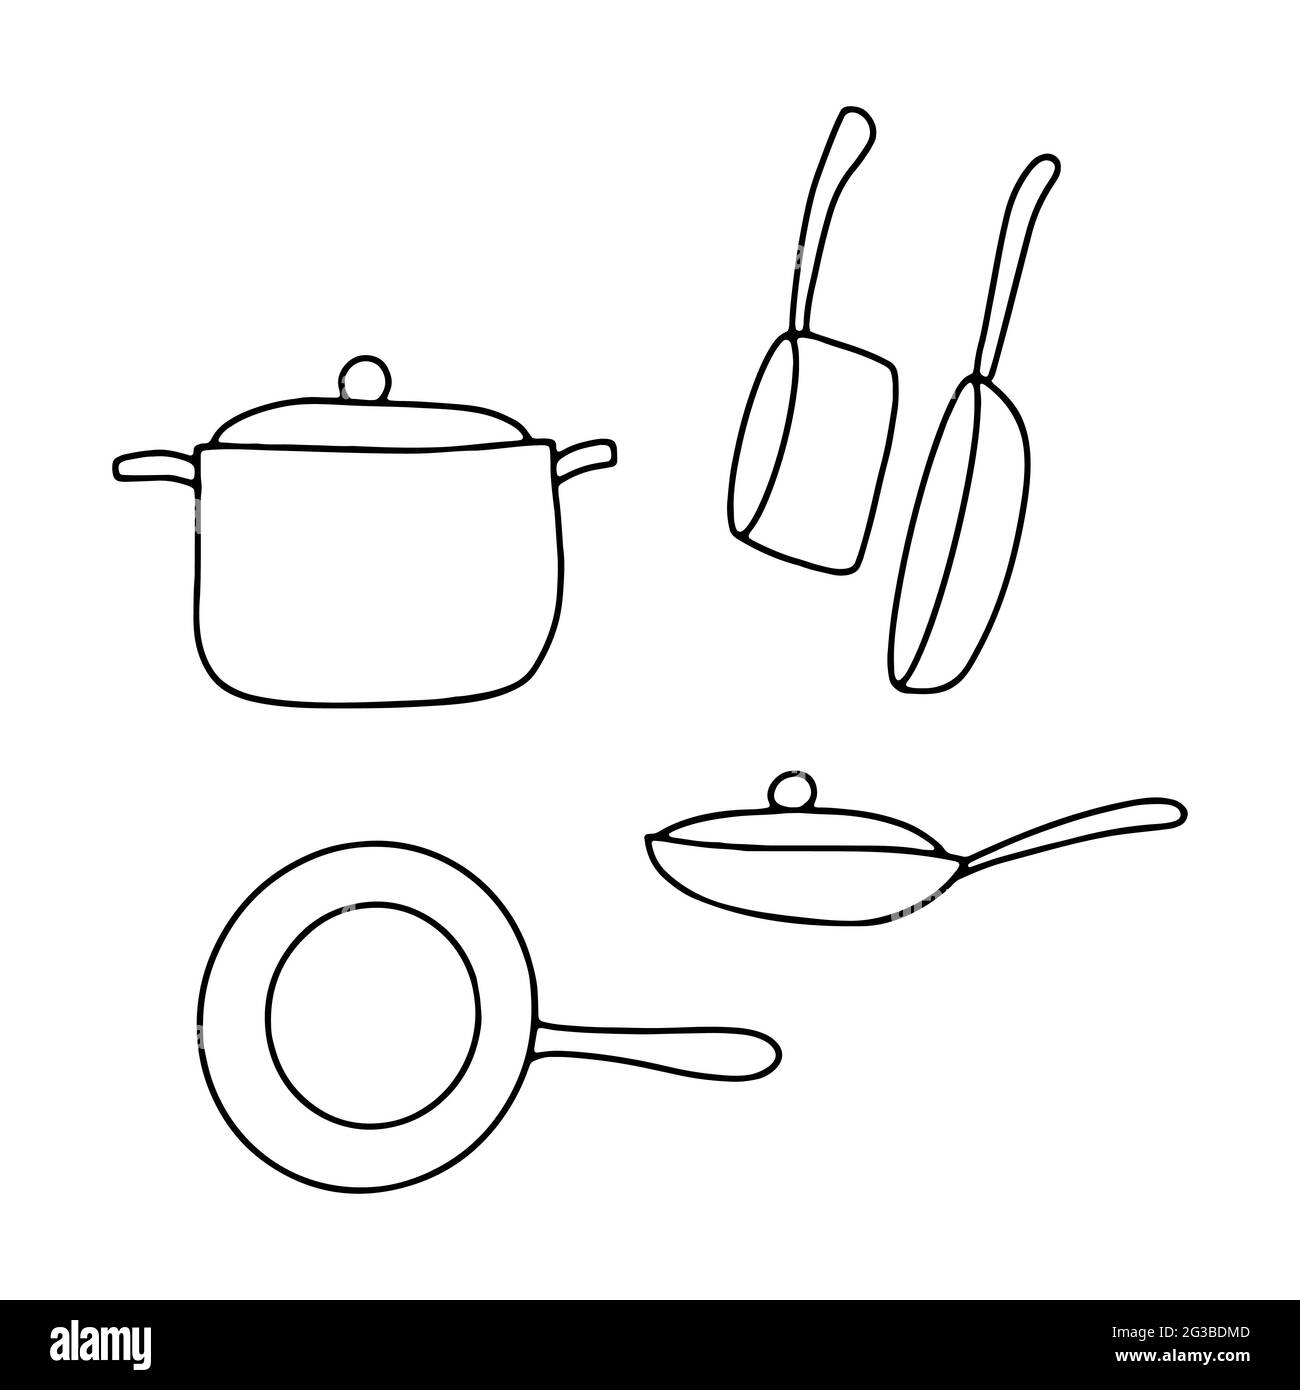 https://c8.alamy.com/compes/2g3bdmd/sarten-para-fideos-juego-de-cacerolas-potes-de-contorno-aislados-sobre-fondo-blanco-utensilios-de-cocina-acogedores-bonitos-utensilios-de-cocina-platos-para-freir-hervir-cocinar-al-aire-libre-2g3bdmd.jpg